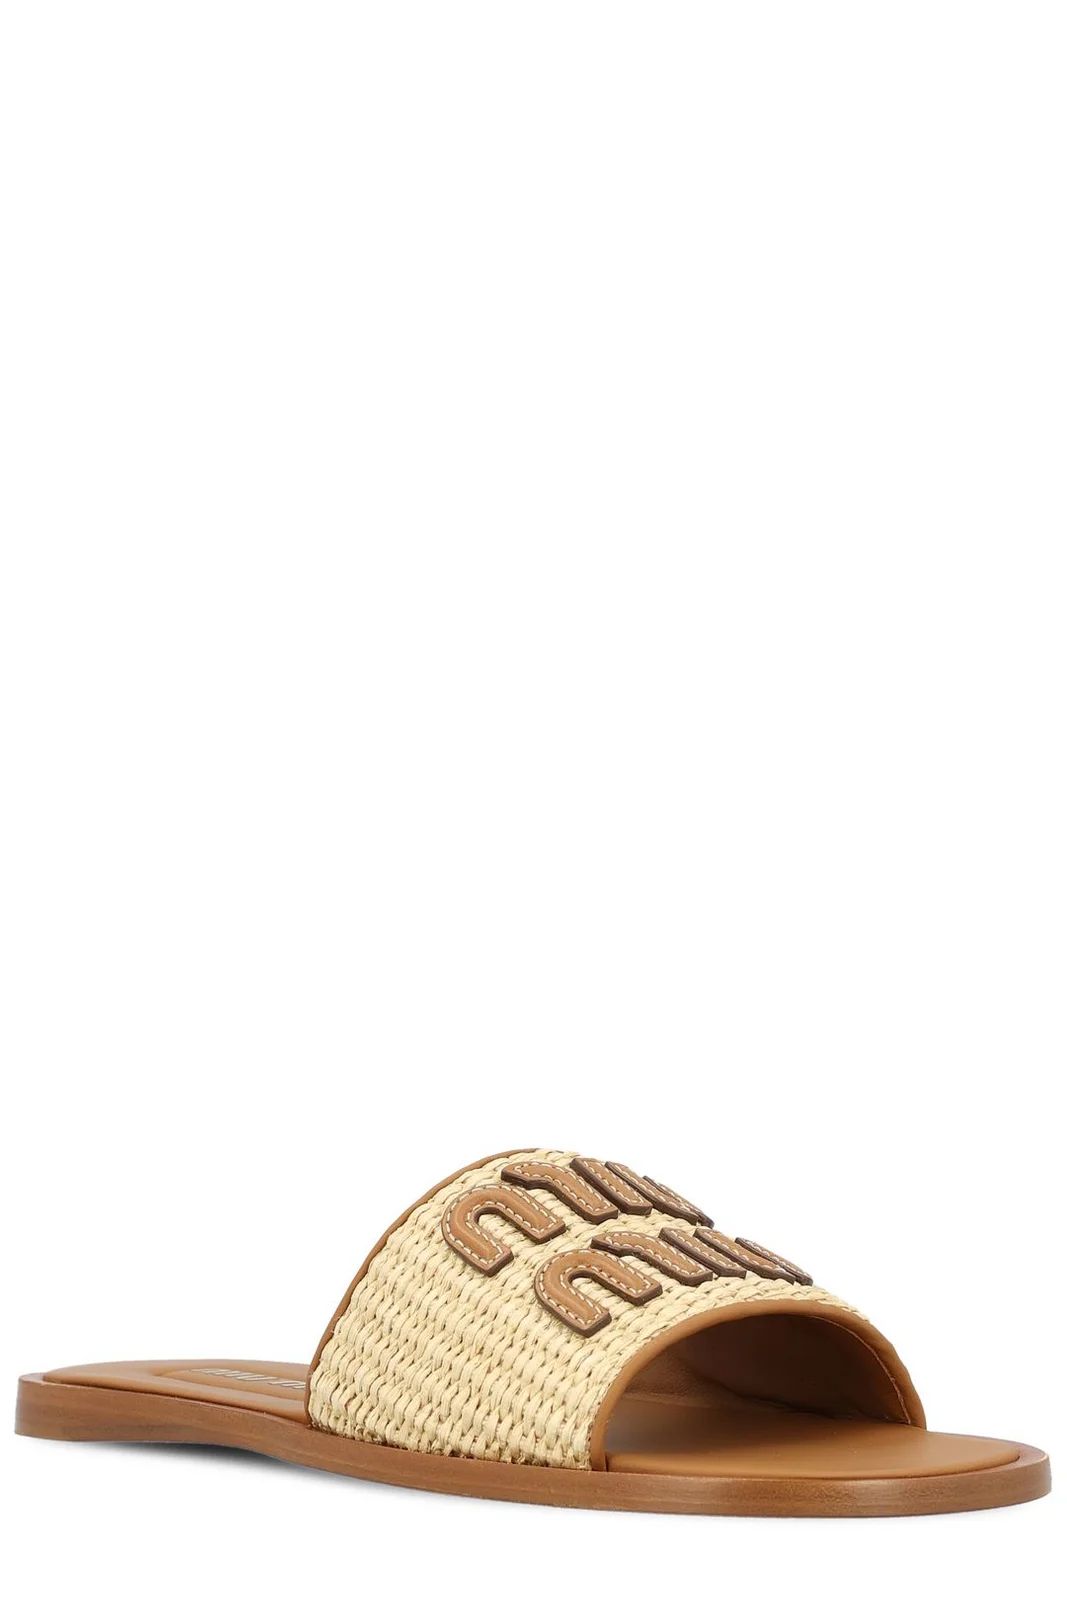 Miu Miu Logo-Detailed Slip-On Sandals | Cettire Global